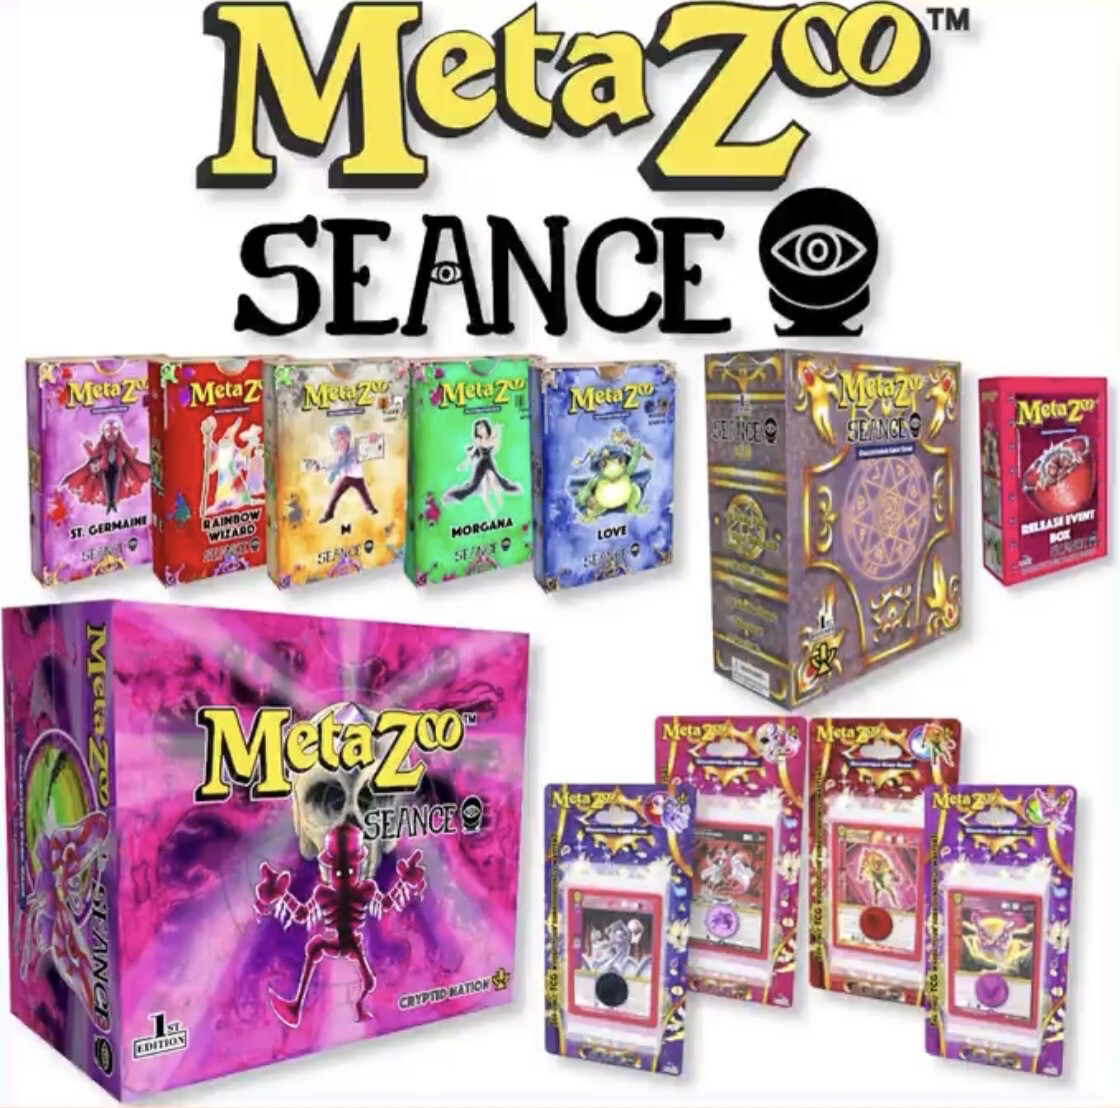 MetaZoo Seance Bundle Release October 21